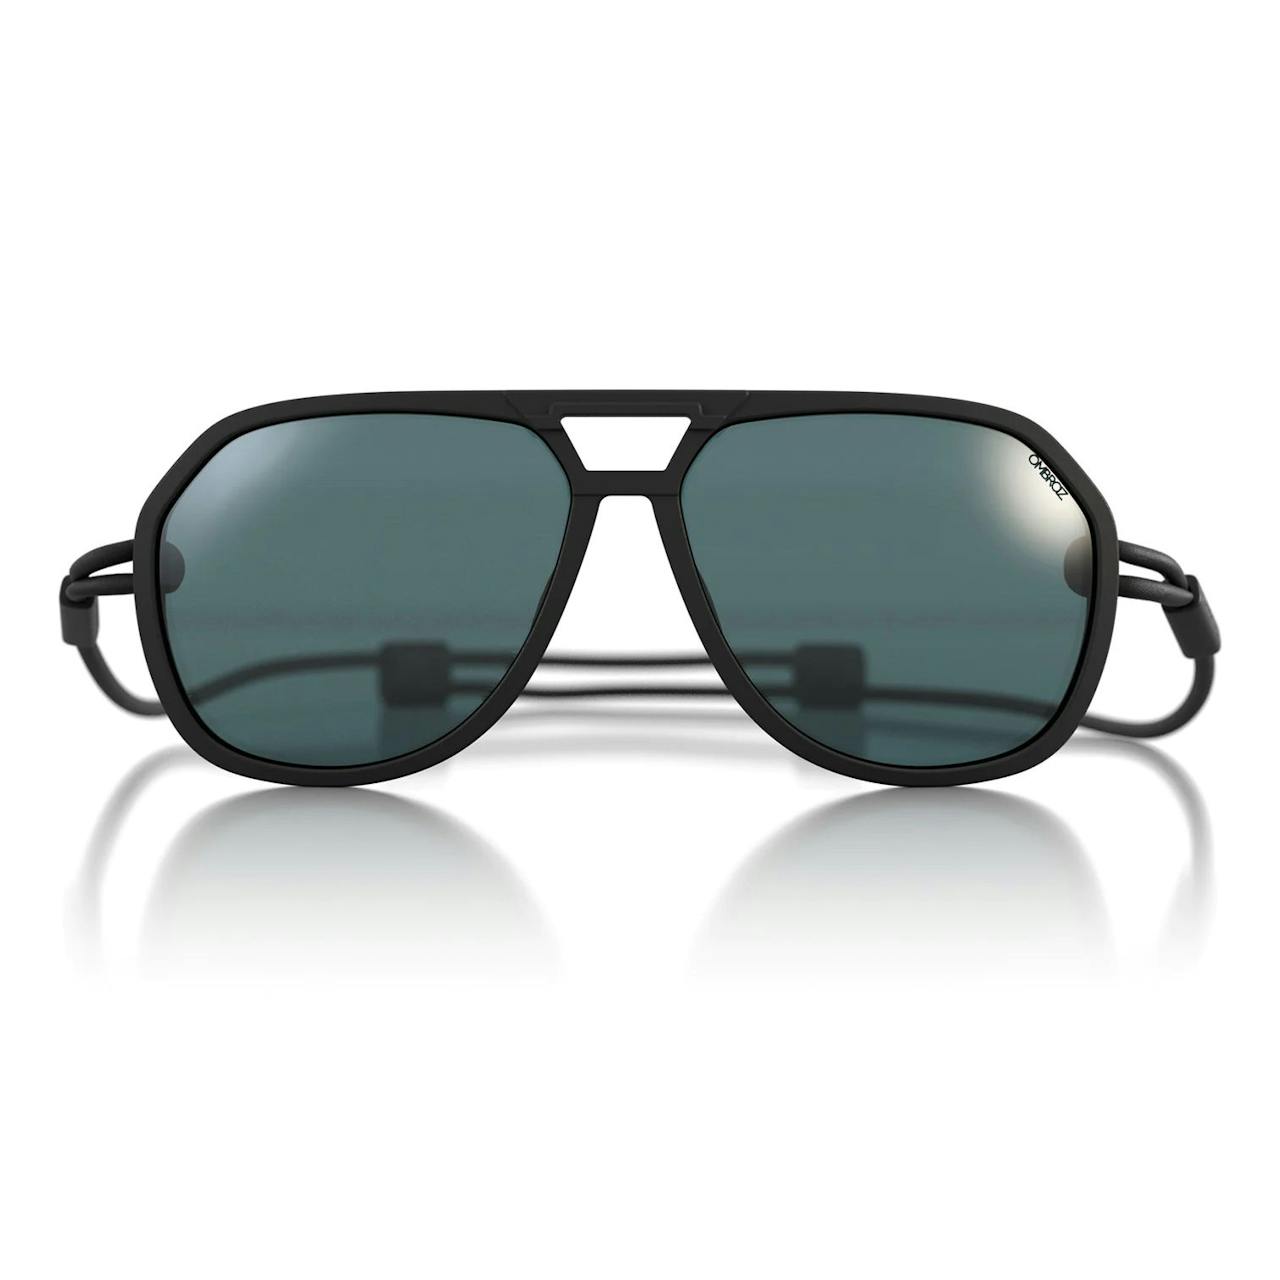 Ombraz Classic Armless Sunglasses - Charcoal/Polarized Grey